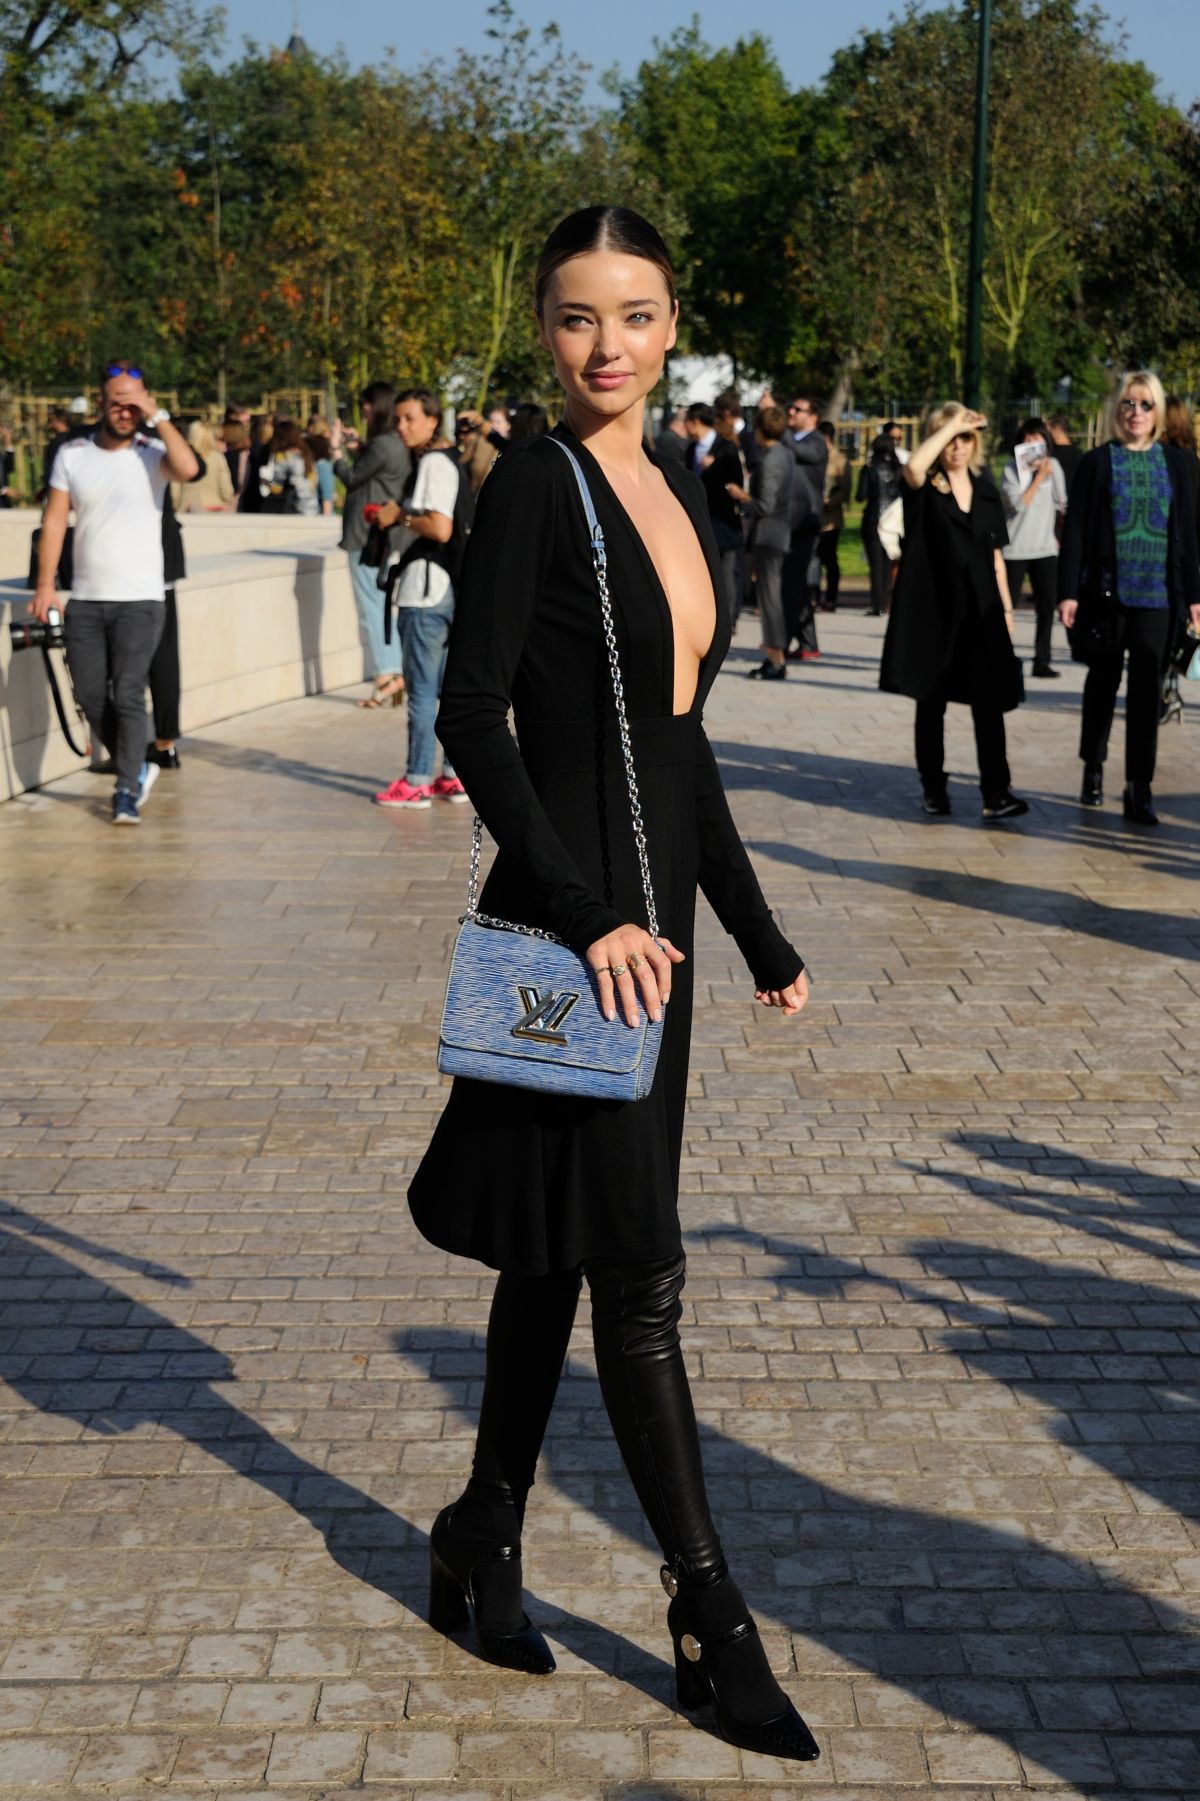 MIRANDA KERR at Louis Vuitton Fashion Show in Paris – HawtCelebs